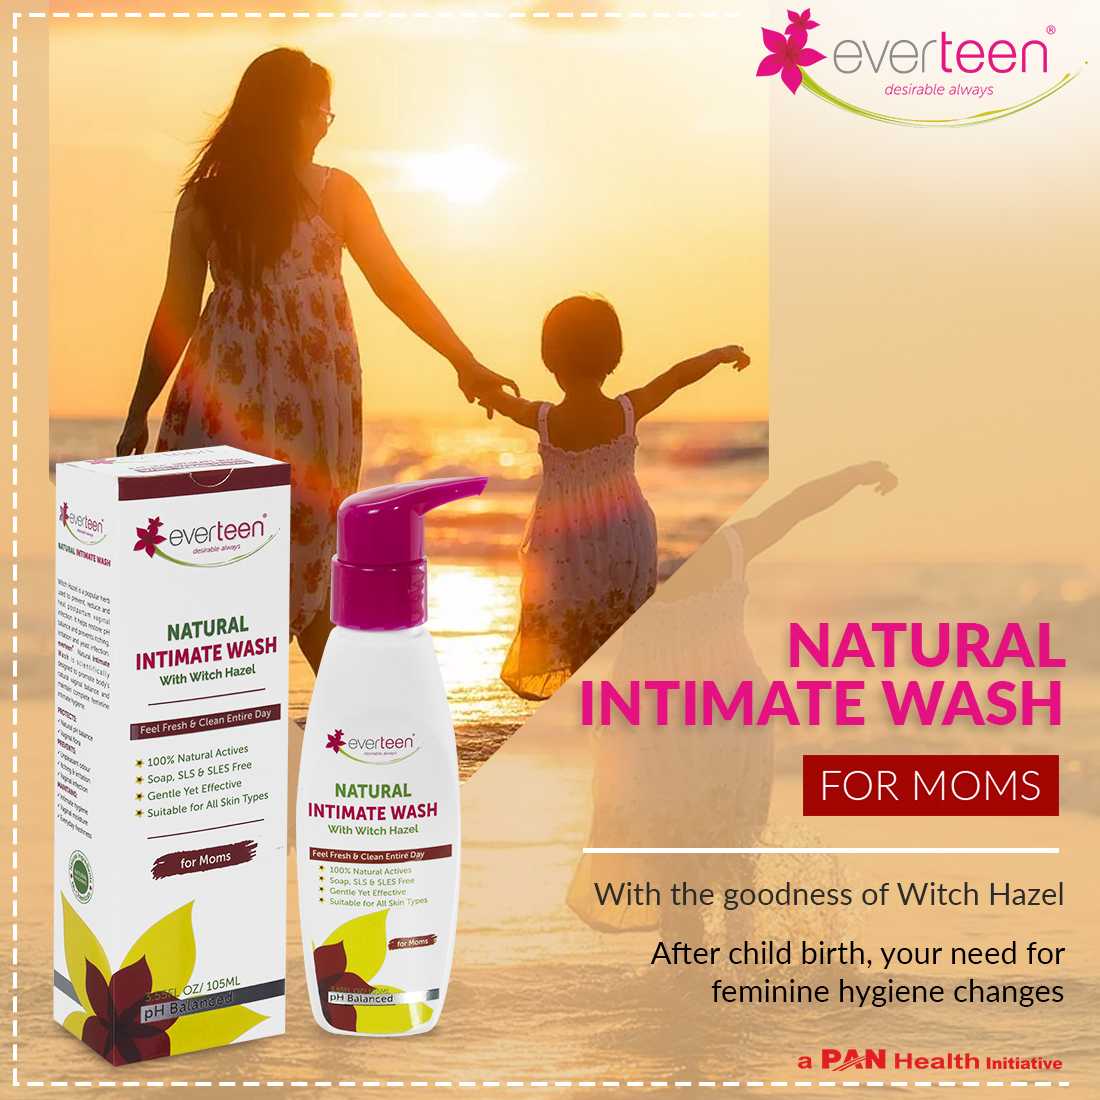 everteen Witch Hazel Natural Intimate Wash for Feminine Hygiene in Moms - everteen